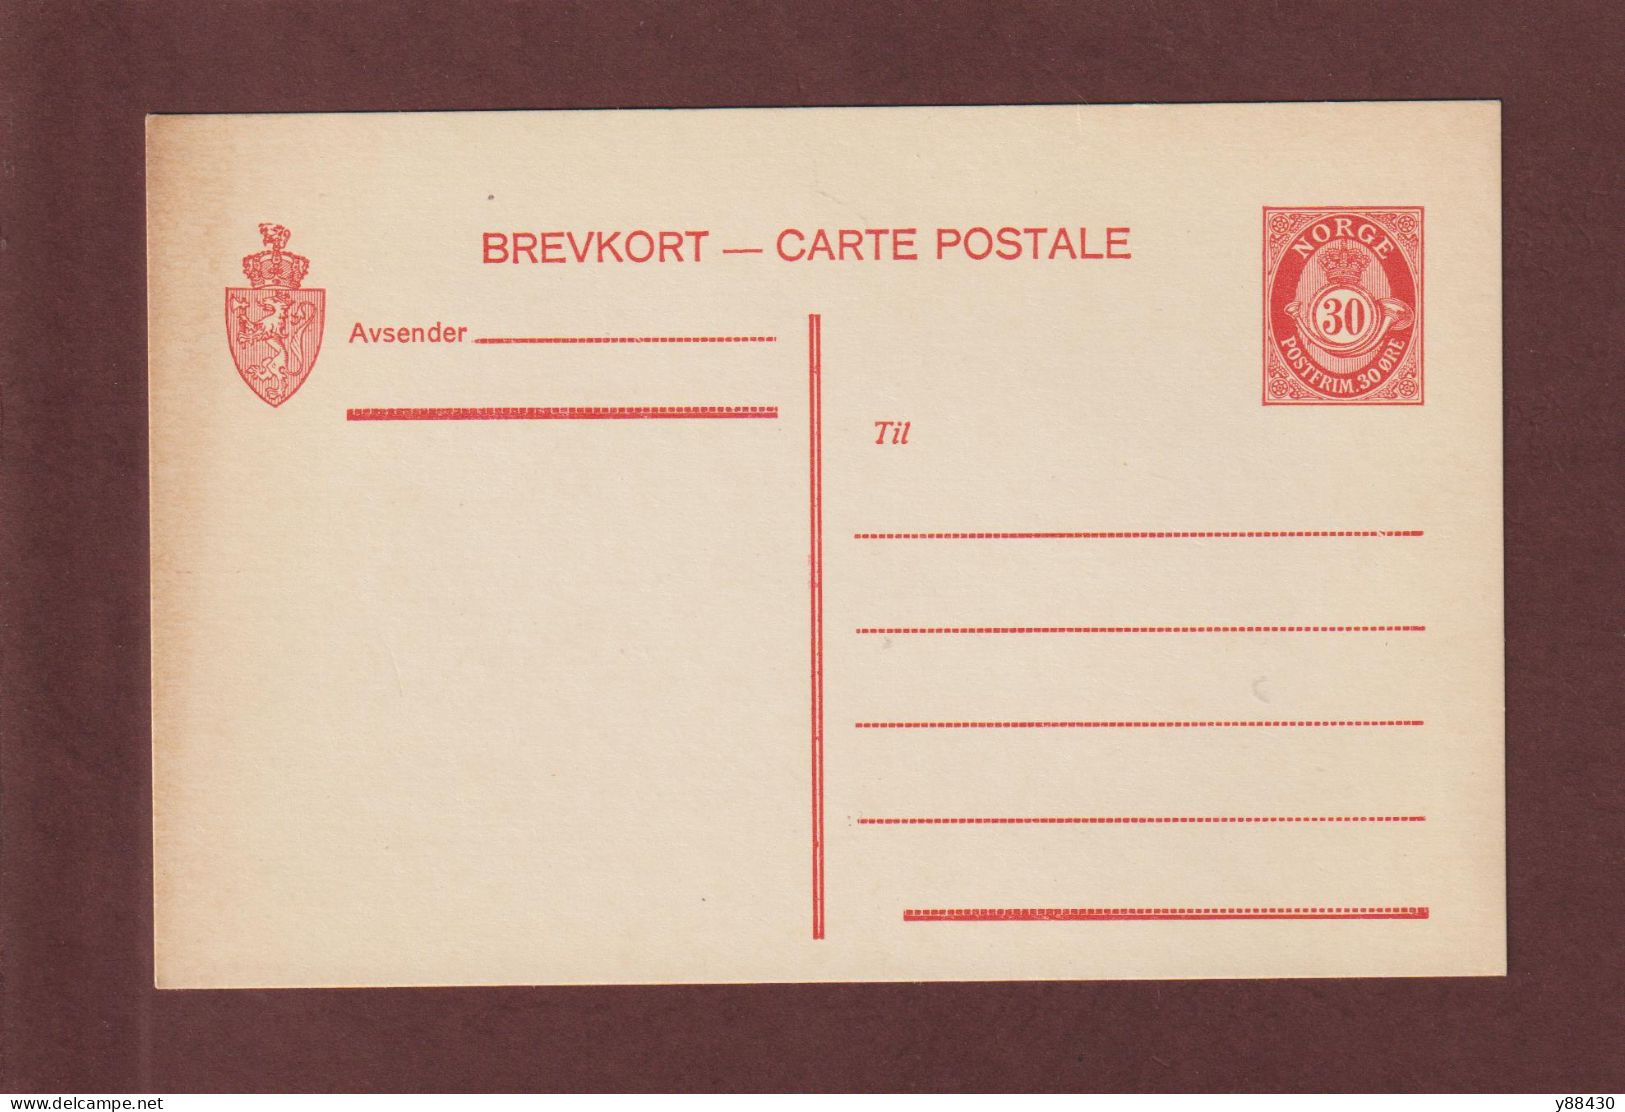 NORVÈGE - Entier Postal Neuf - 1910/1930 - Carte Postale - Cor - 30. Ø . Rouge  - 2 Scan - Postal Stationery